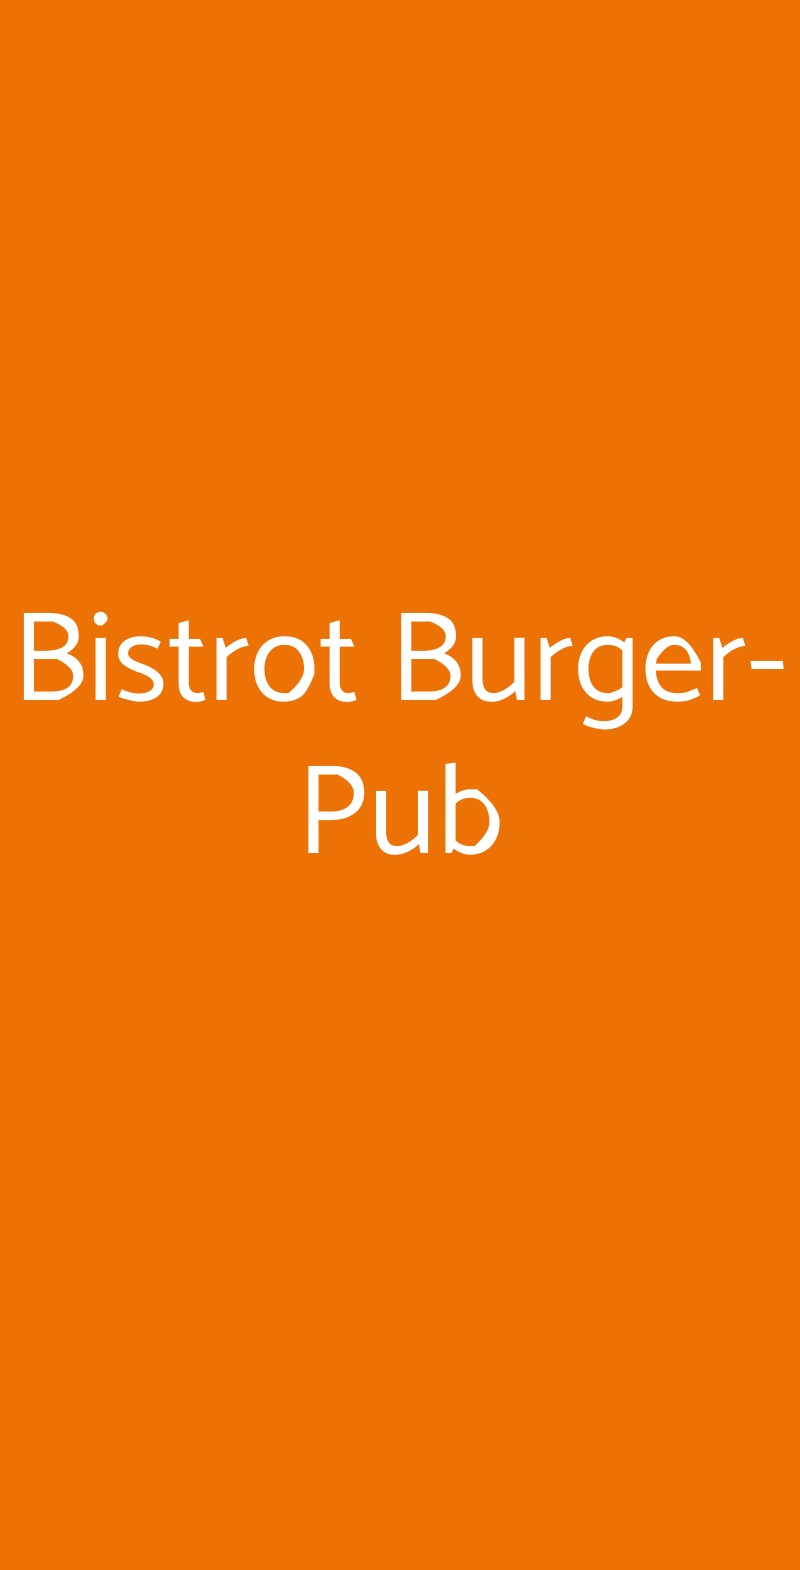 Bistrot Burger-Pub Castellammare del Golfo menù 1 pagina